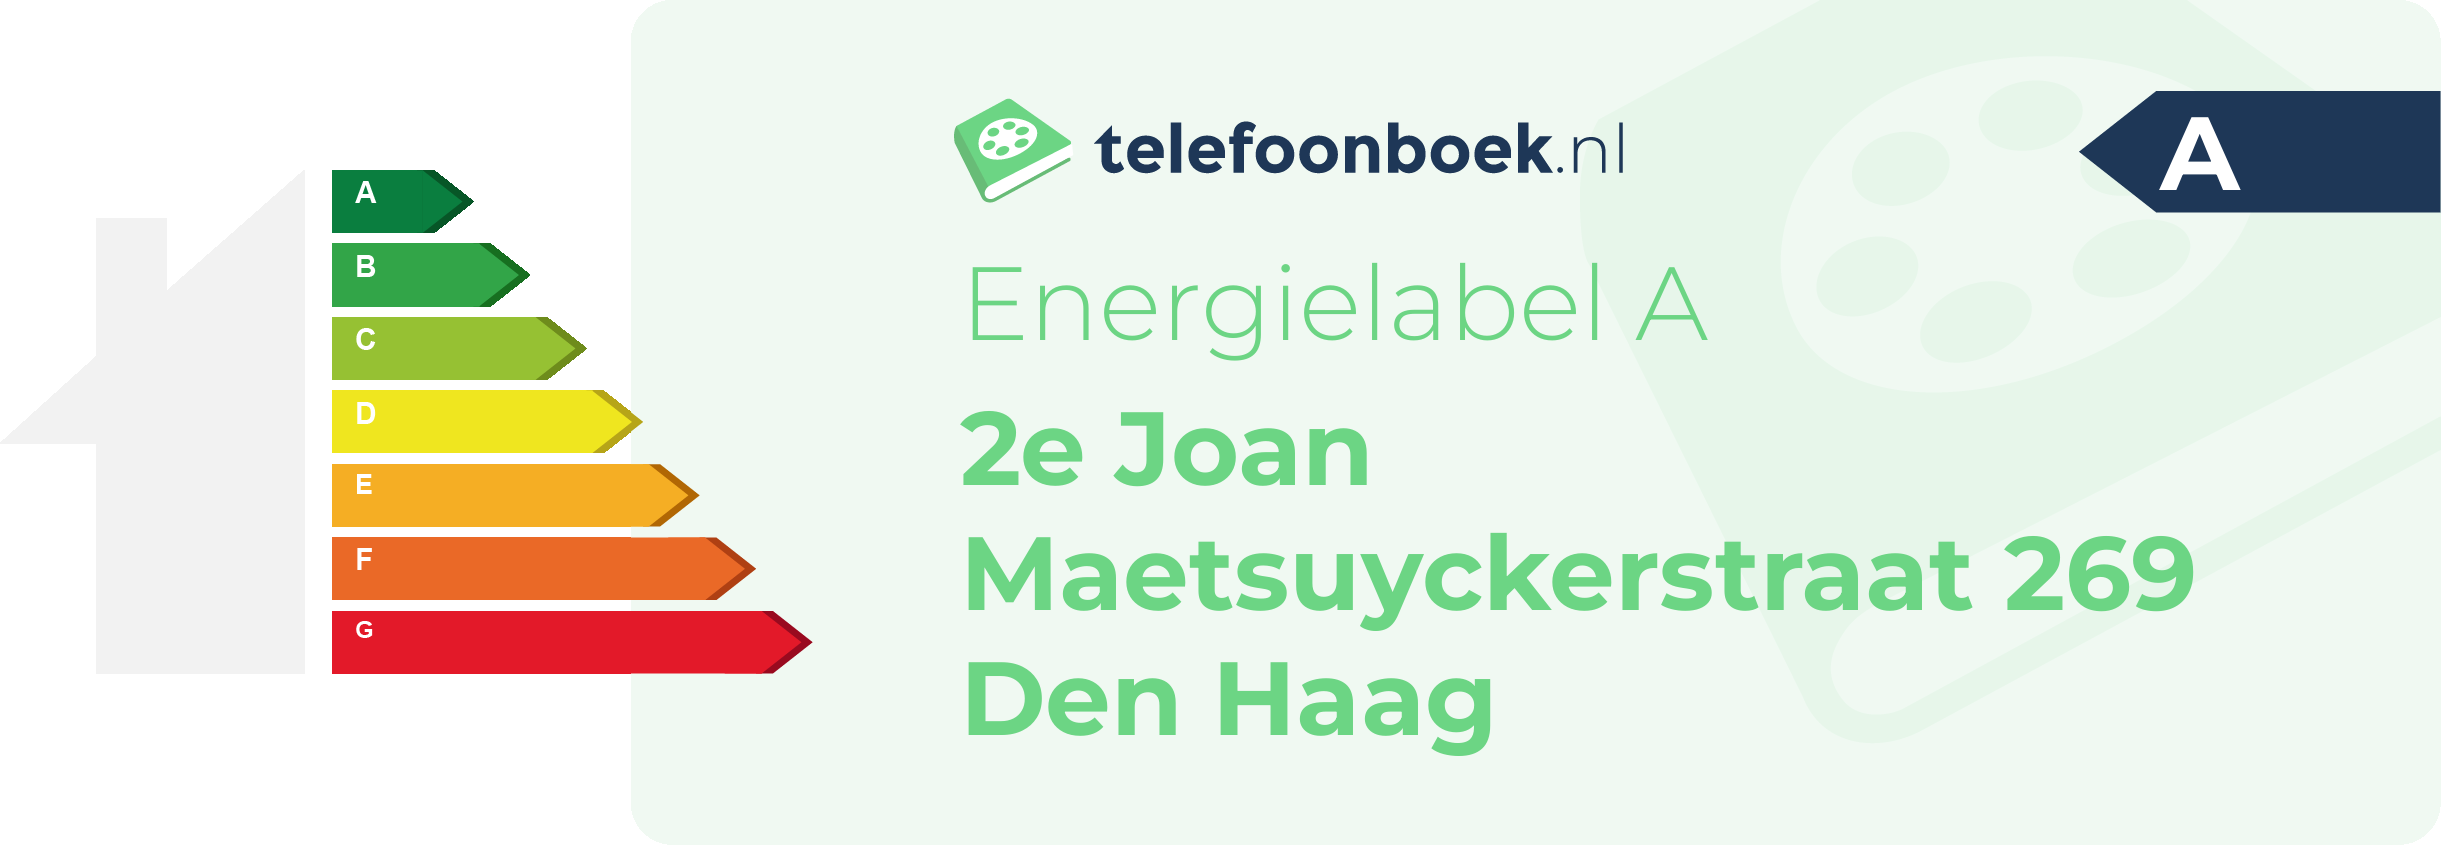 Energielabel 2e Joan Maetsuyckerstraat 269 Den Haag